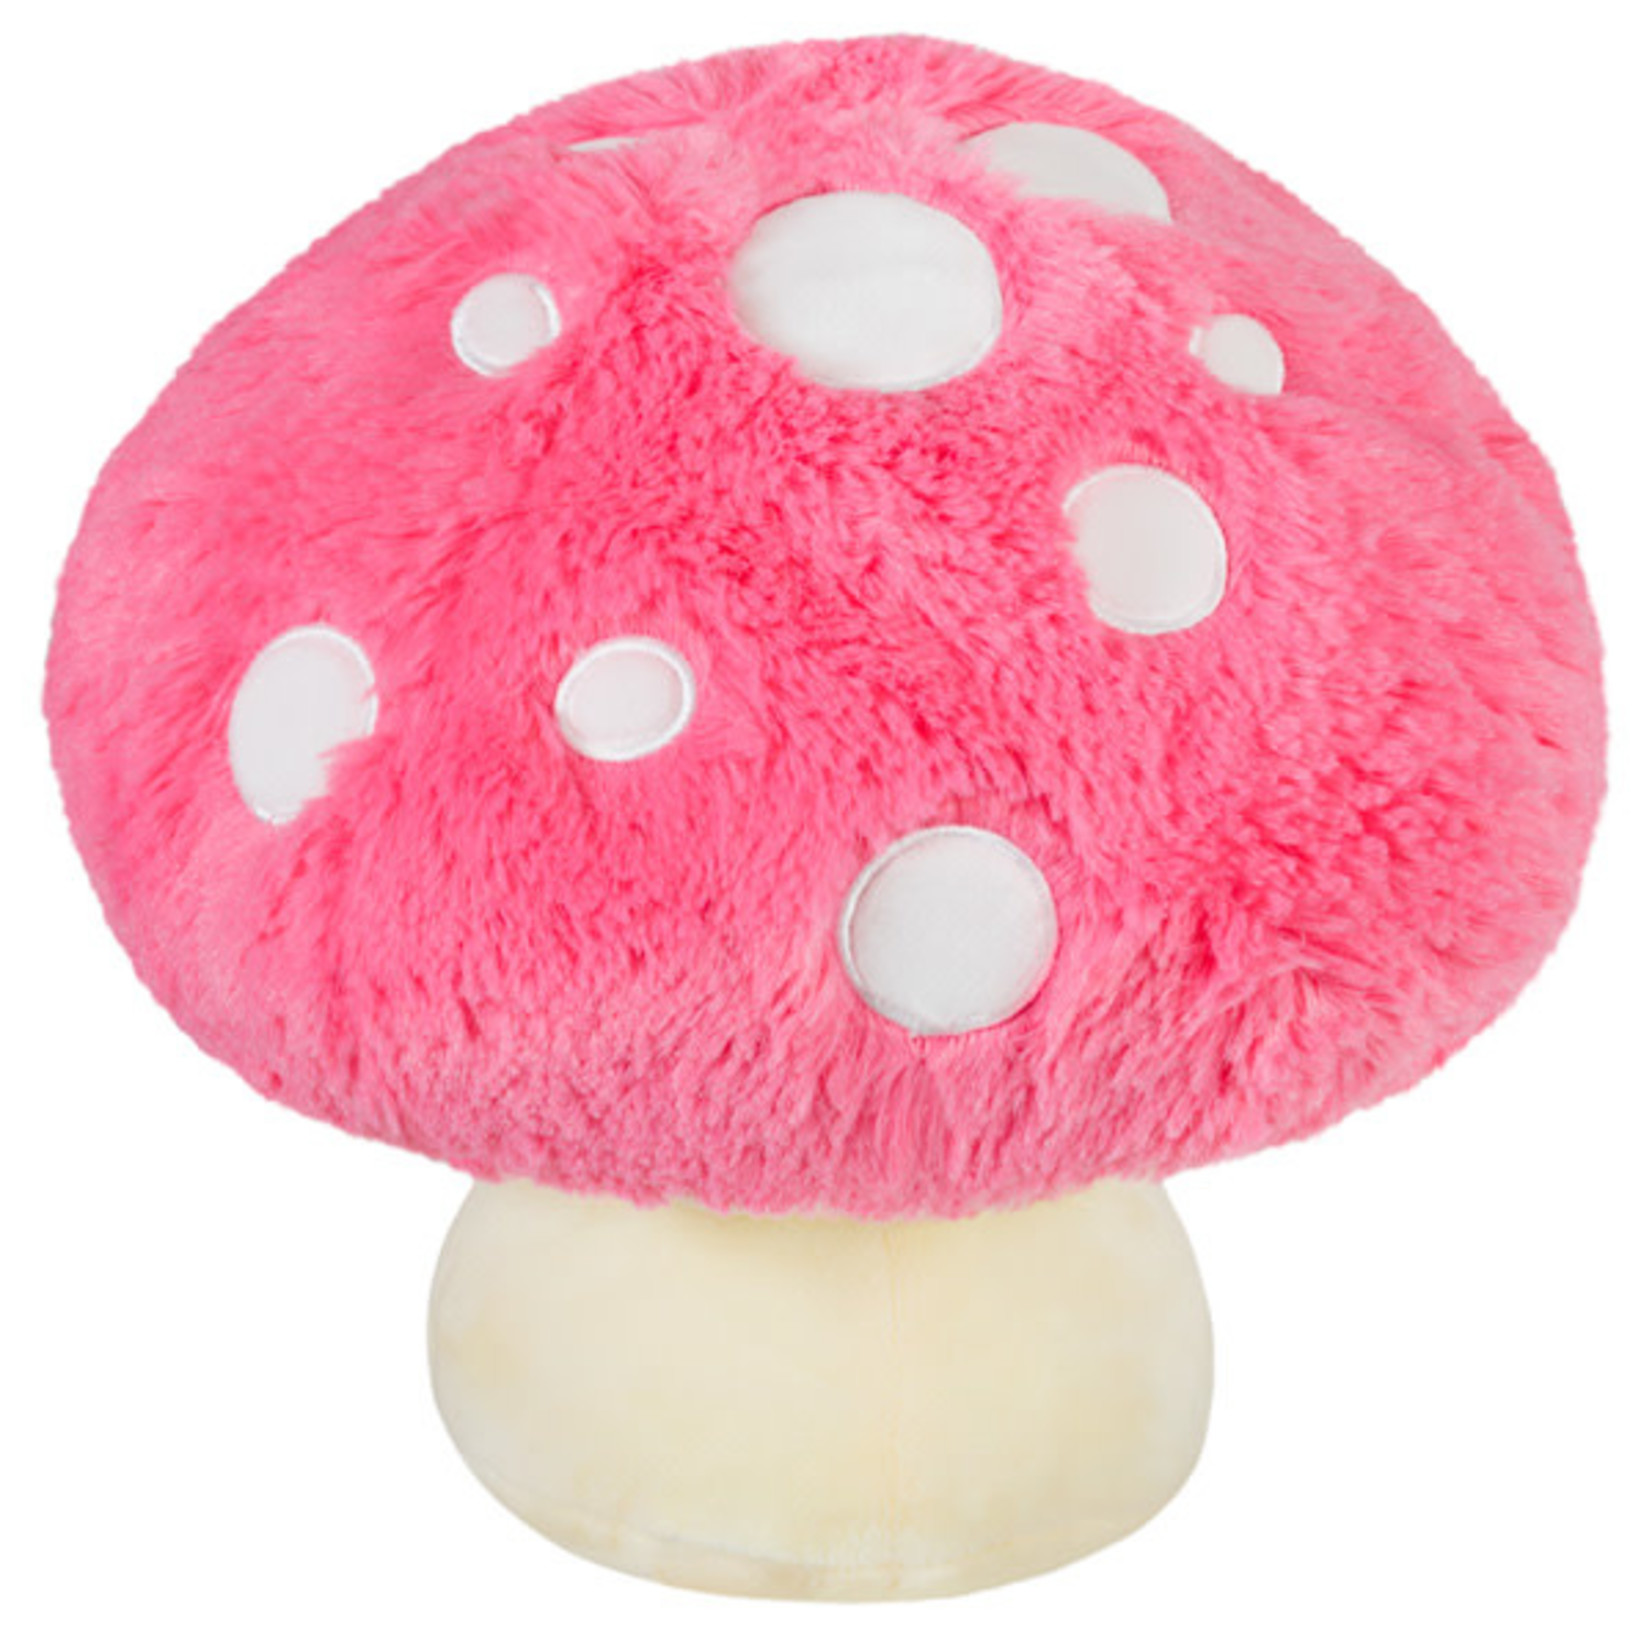 Squishable Mini Squishable Mushroom